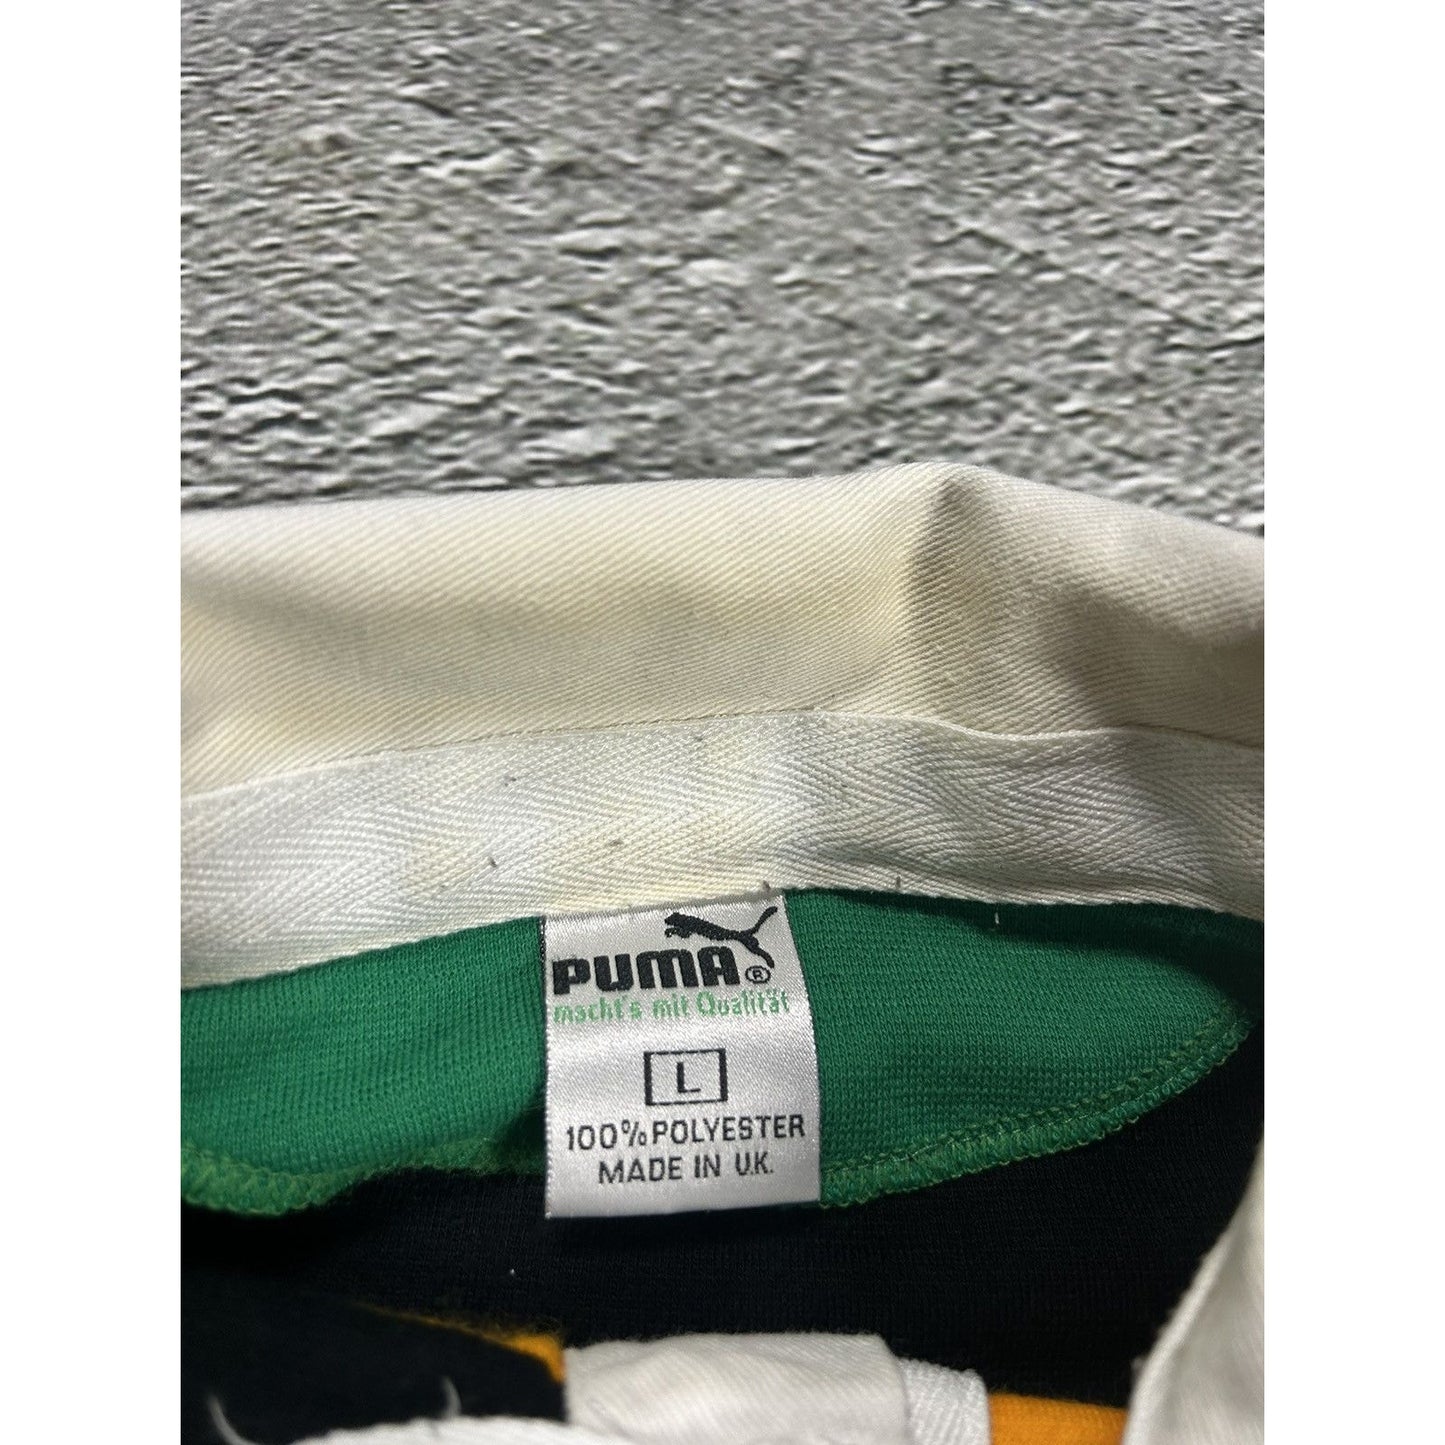 Puma Northampton FC Rugby Shirt jersey Jamaica 90s Carlsberg